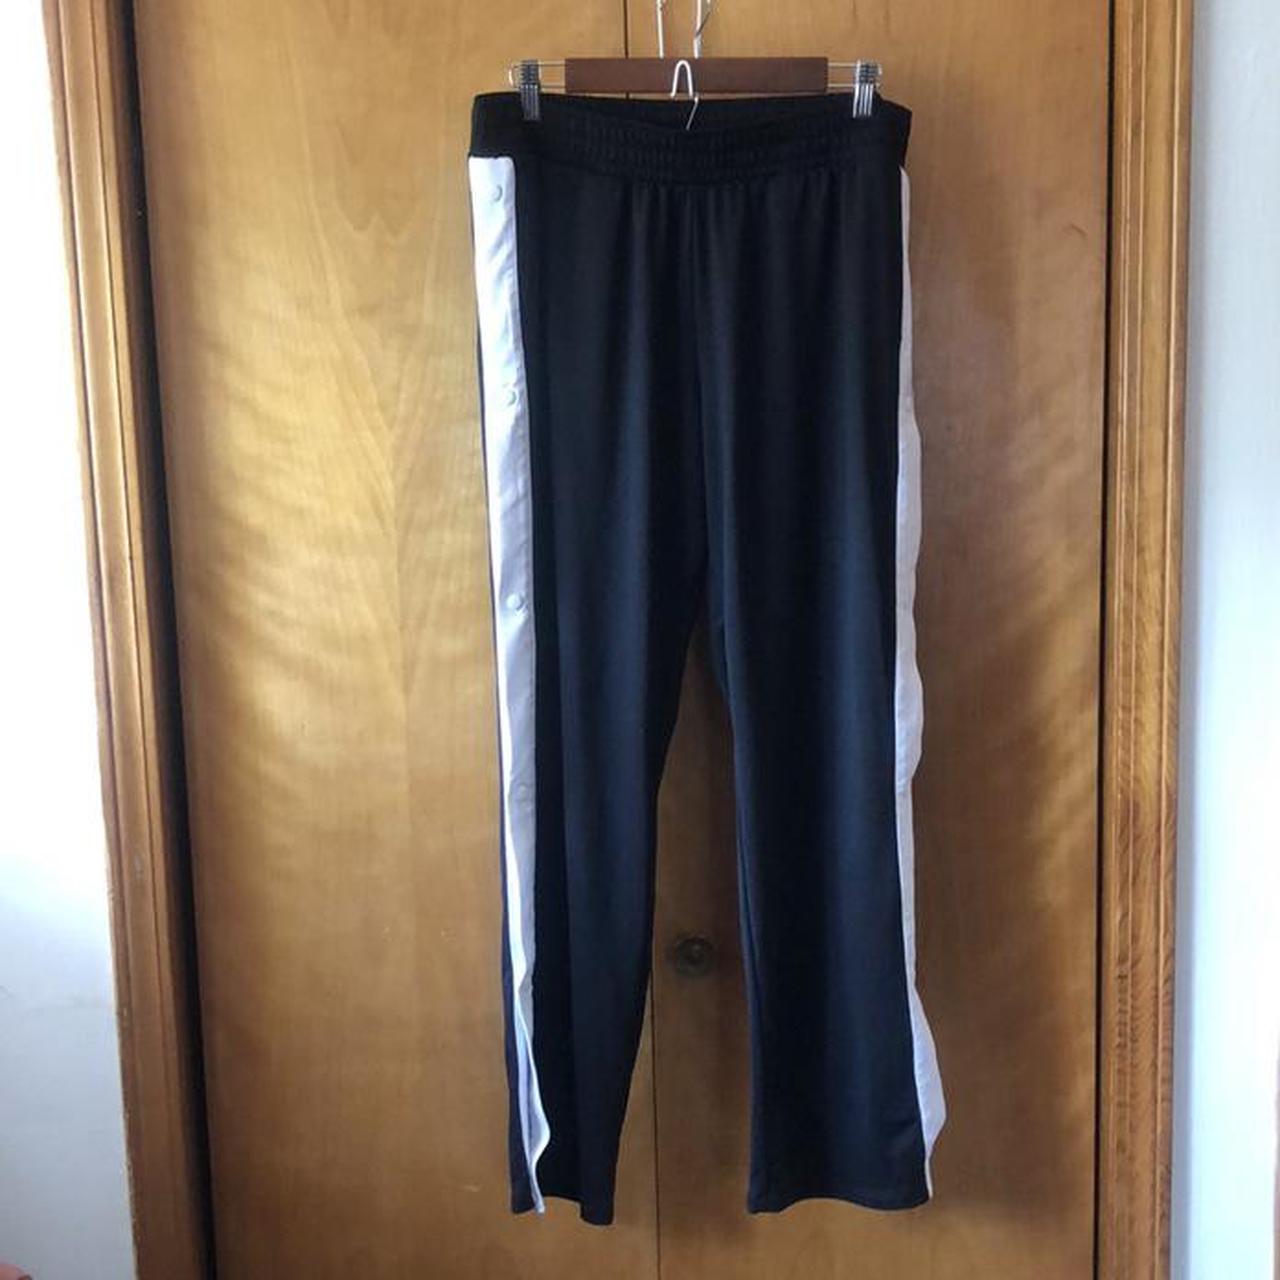 Jockey Ladies' High-Rise Yoga Pant 1630465 (Size S, Navy) - Walmart.com